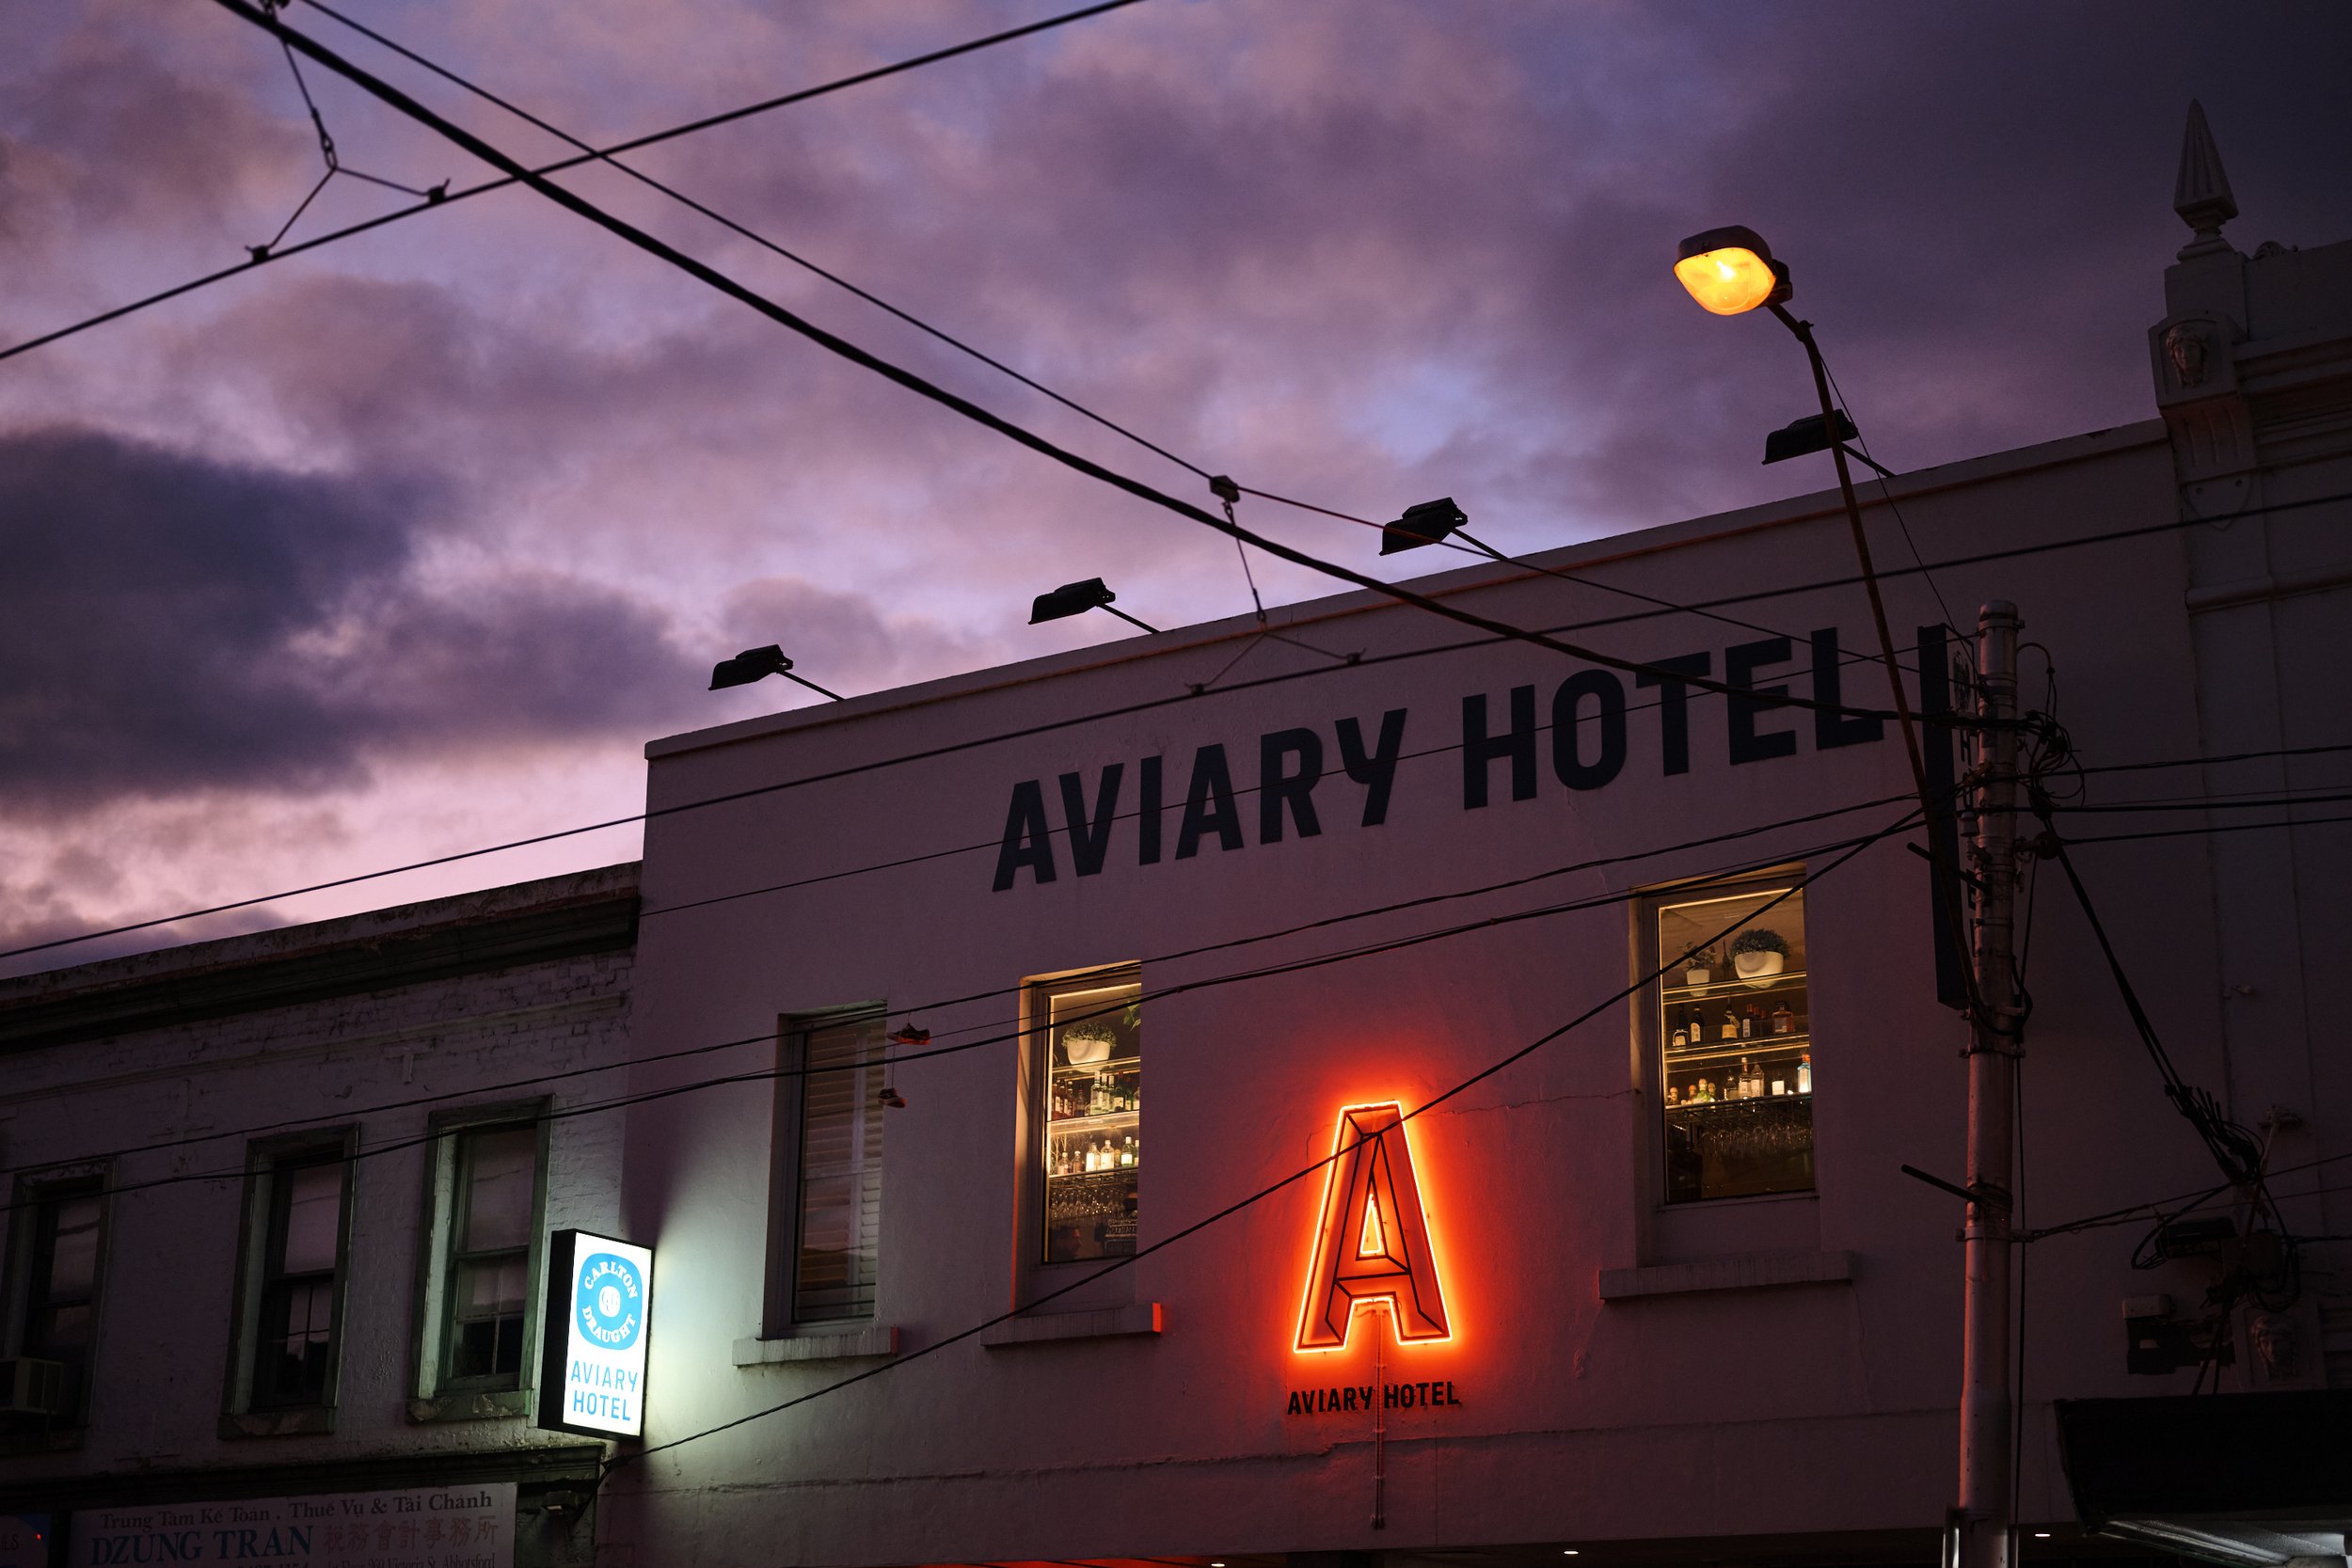 Aviary Hotel - Serv Agency - Longboy Media 2 (2).jpg